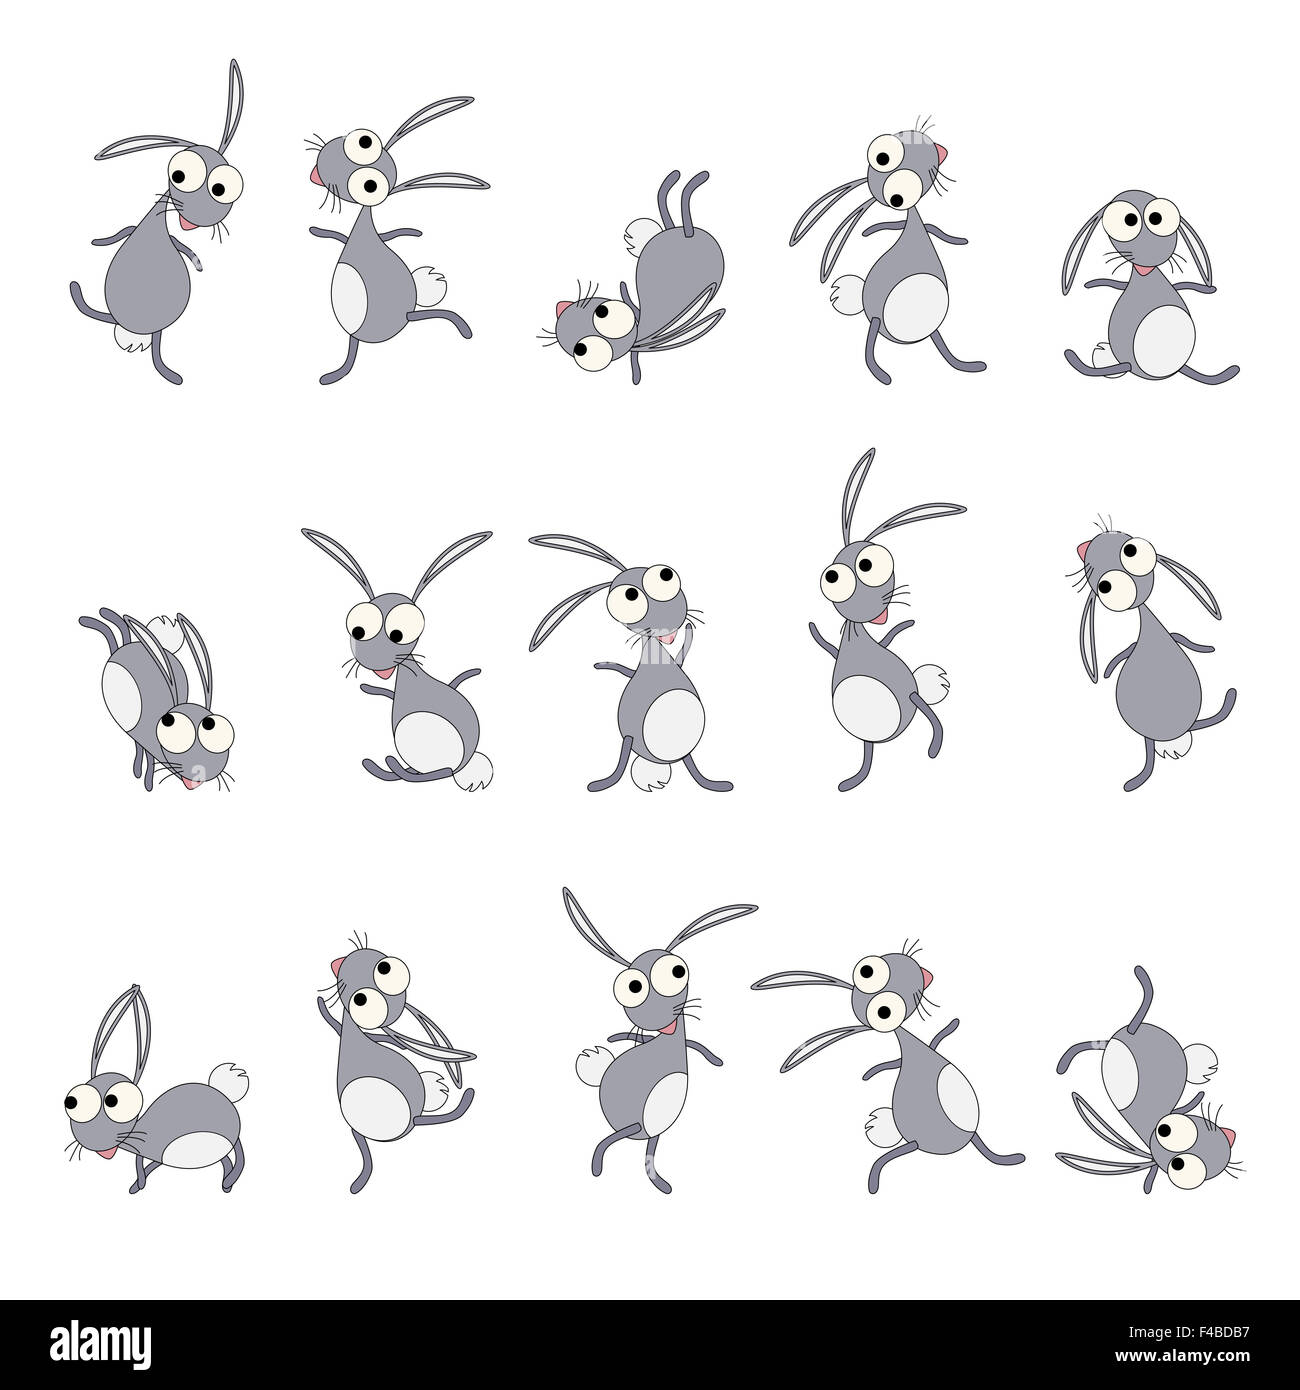 Dancing rabbits cartoon Stock Photo